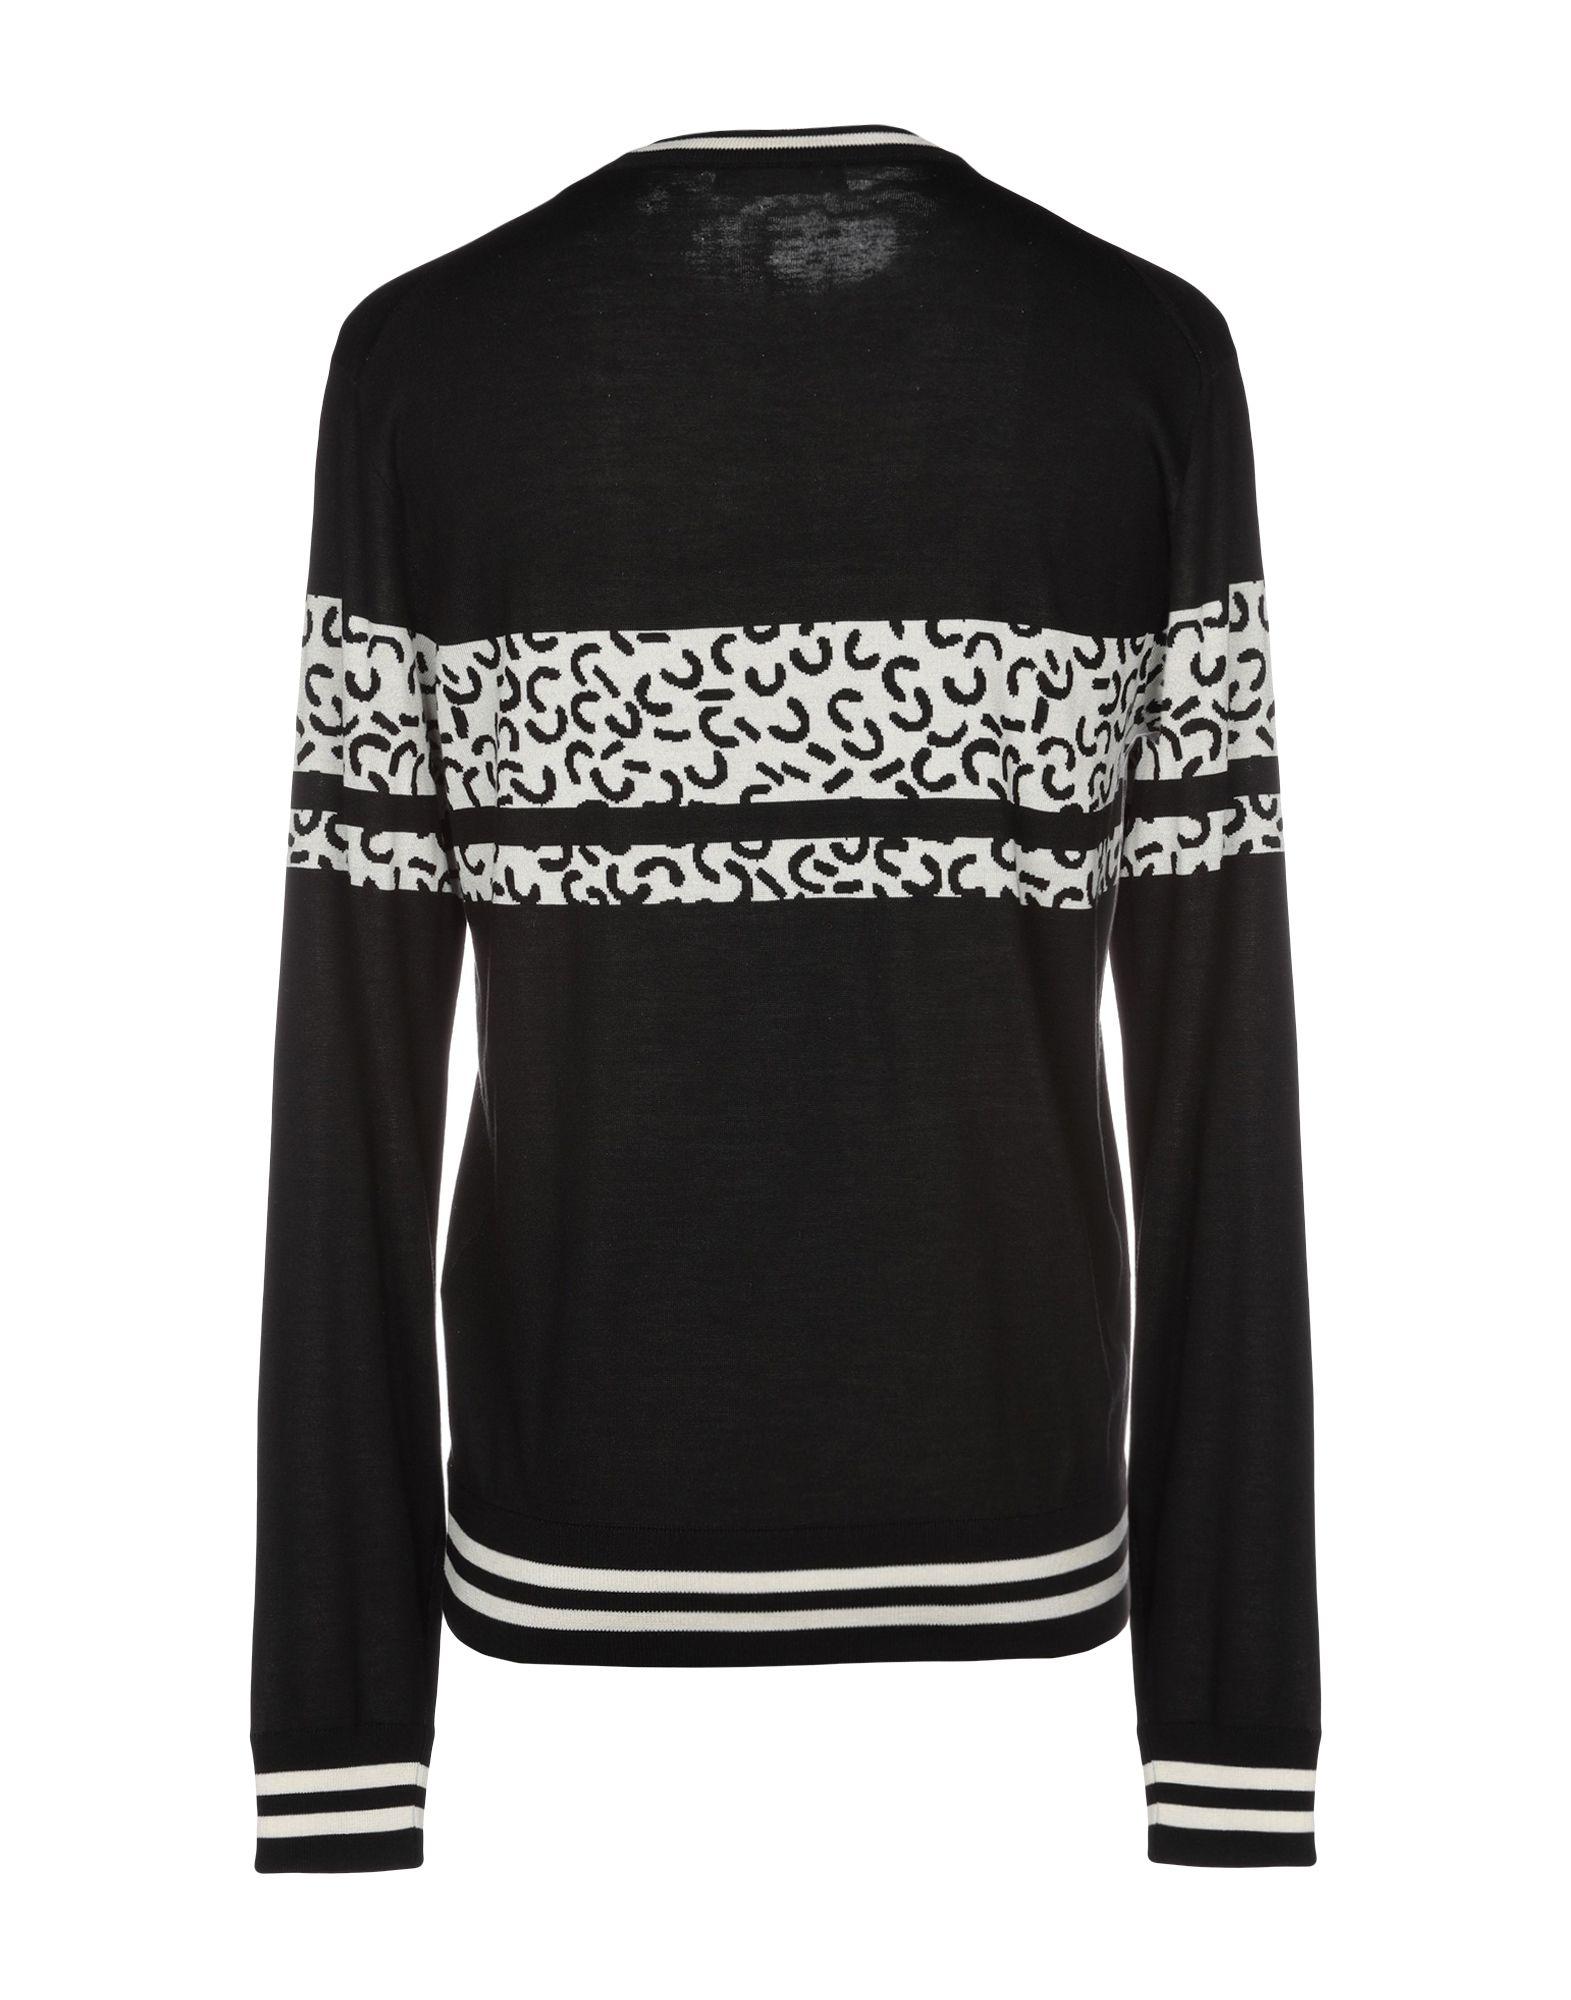 Dolce & Gabbana Silk Sweater in Black for Men - Lyst